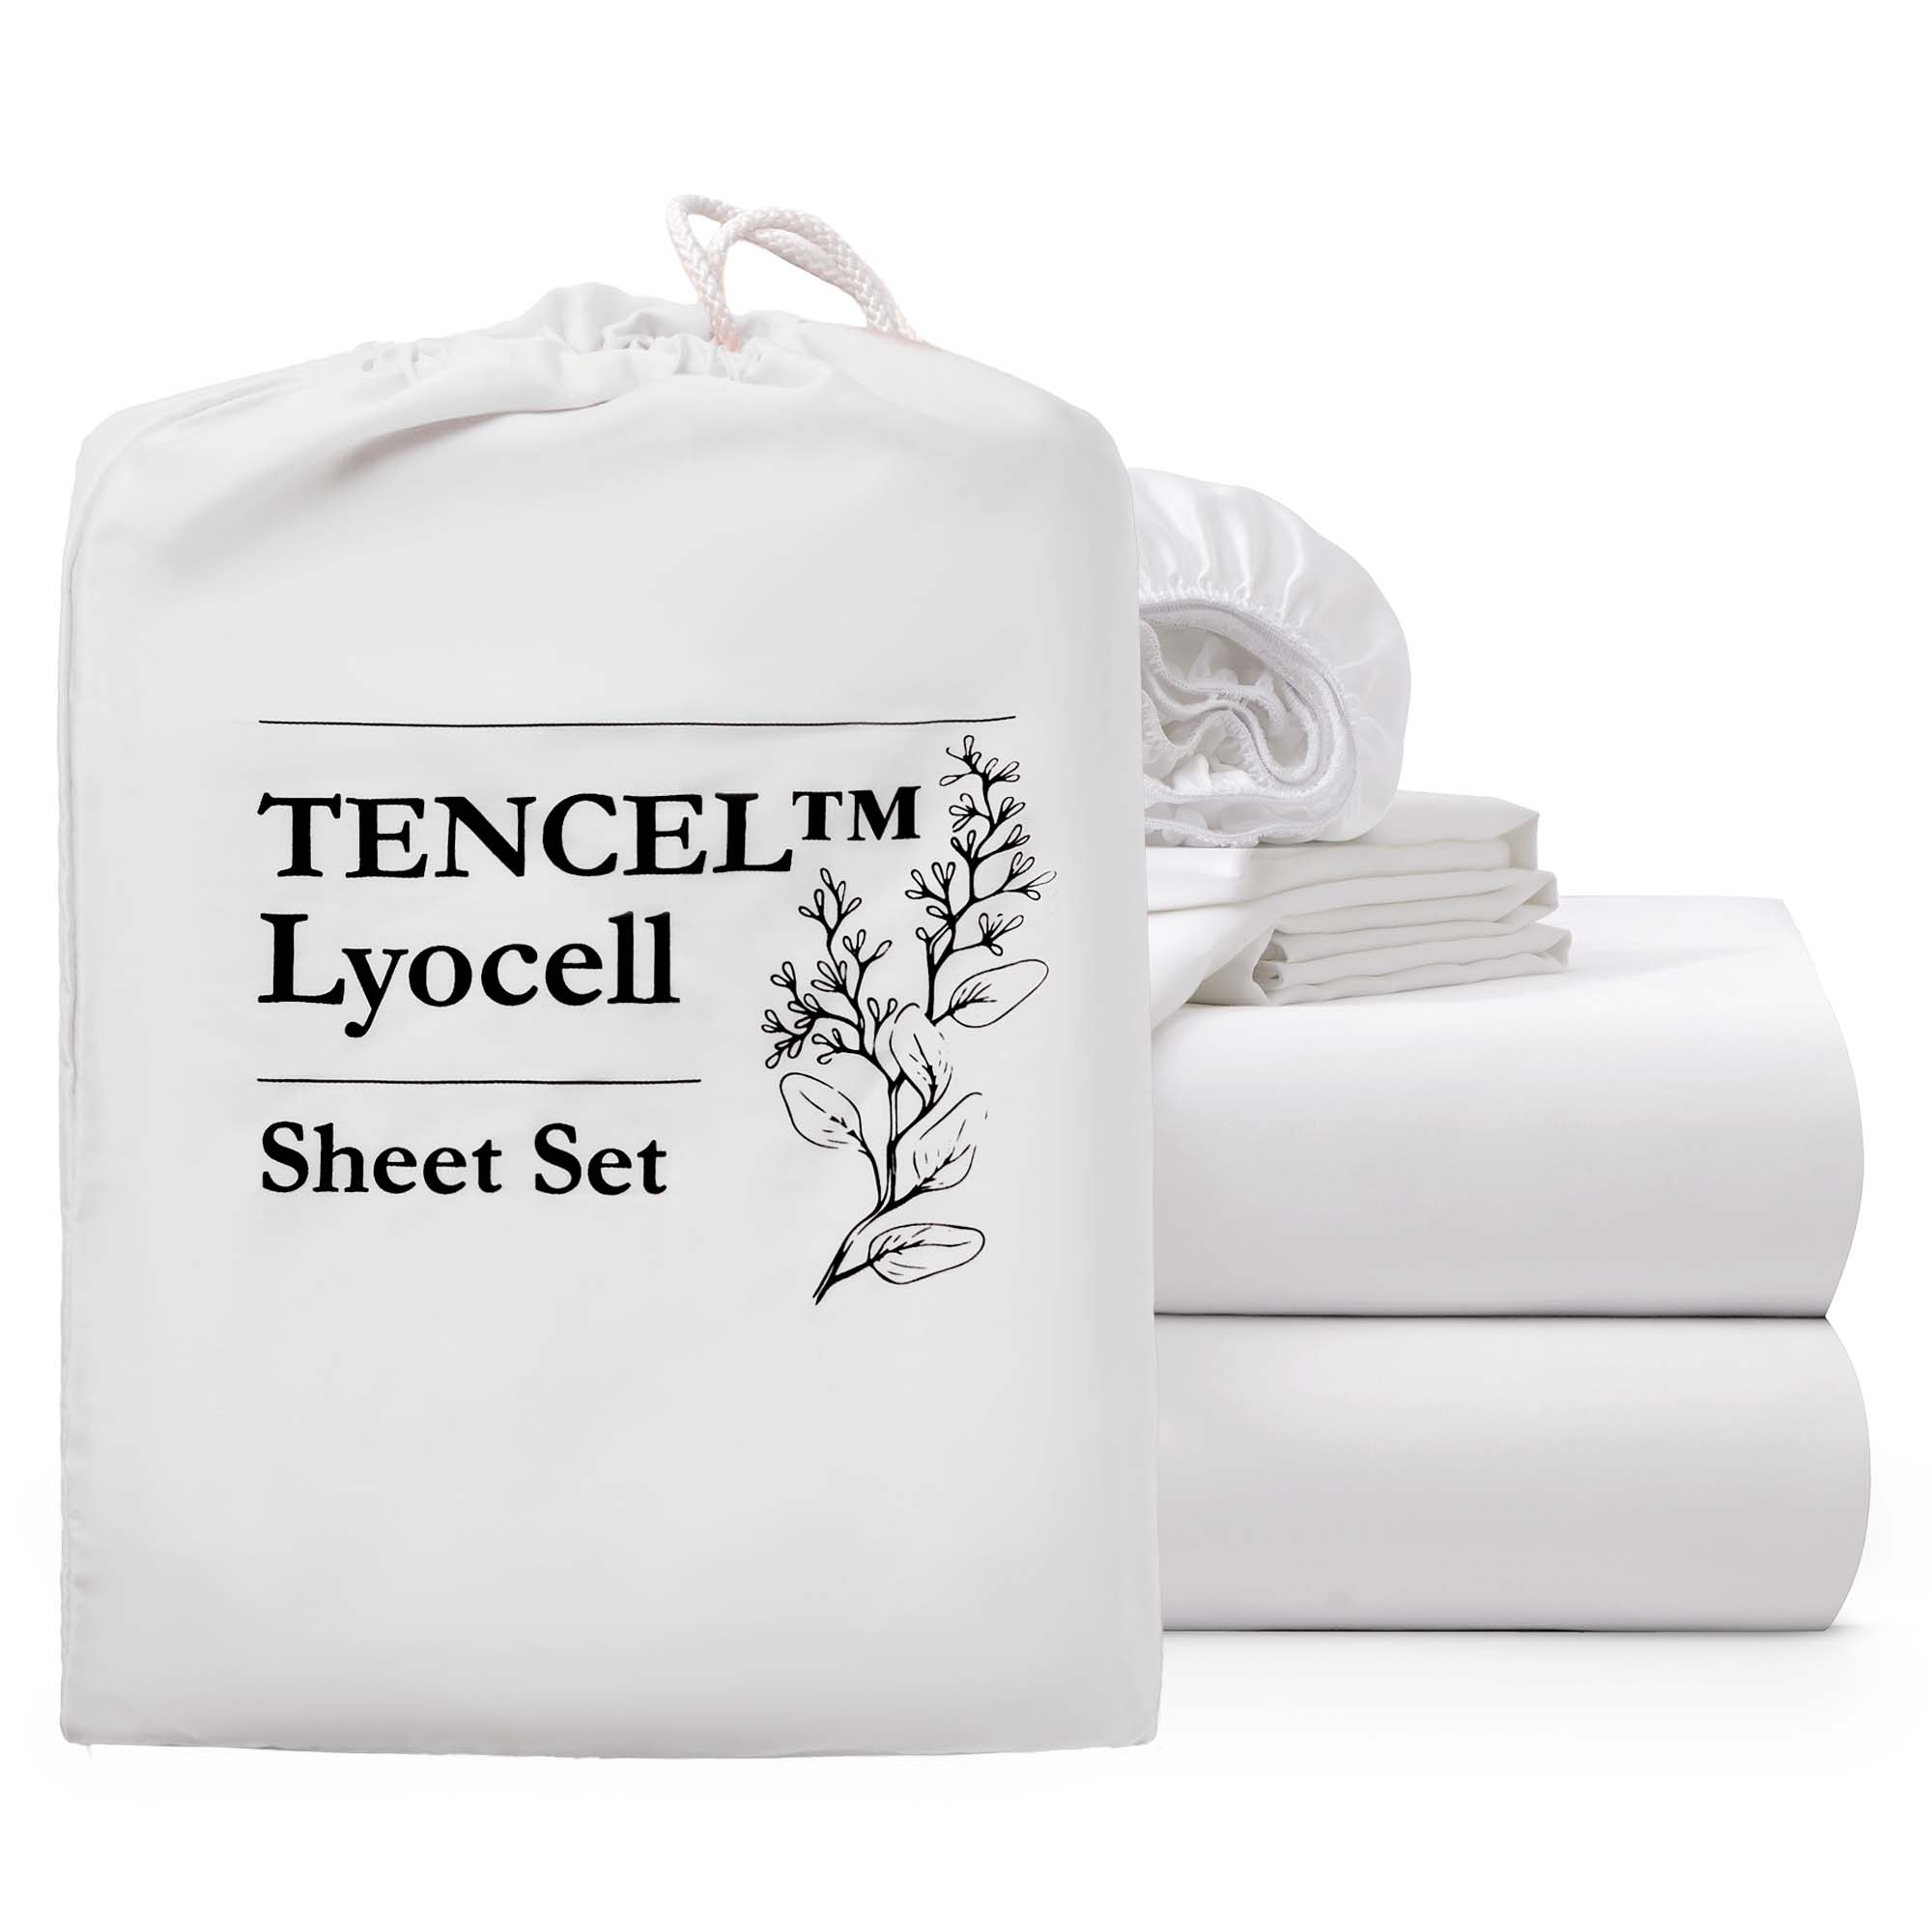 Silky Soft TENCELâ¢ Lyocell Cooling Sheet Set-Breathability And Moisture-wicking Bedding Set - Primrose Pink, King